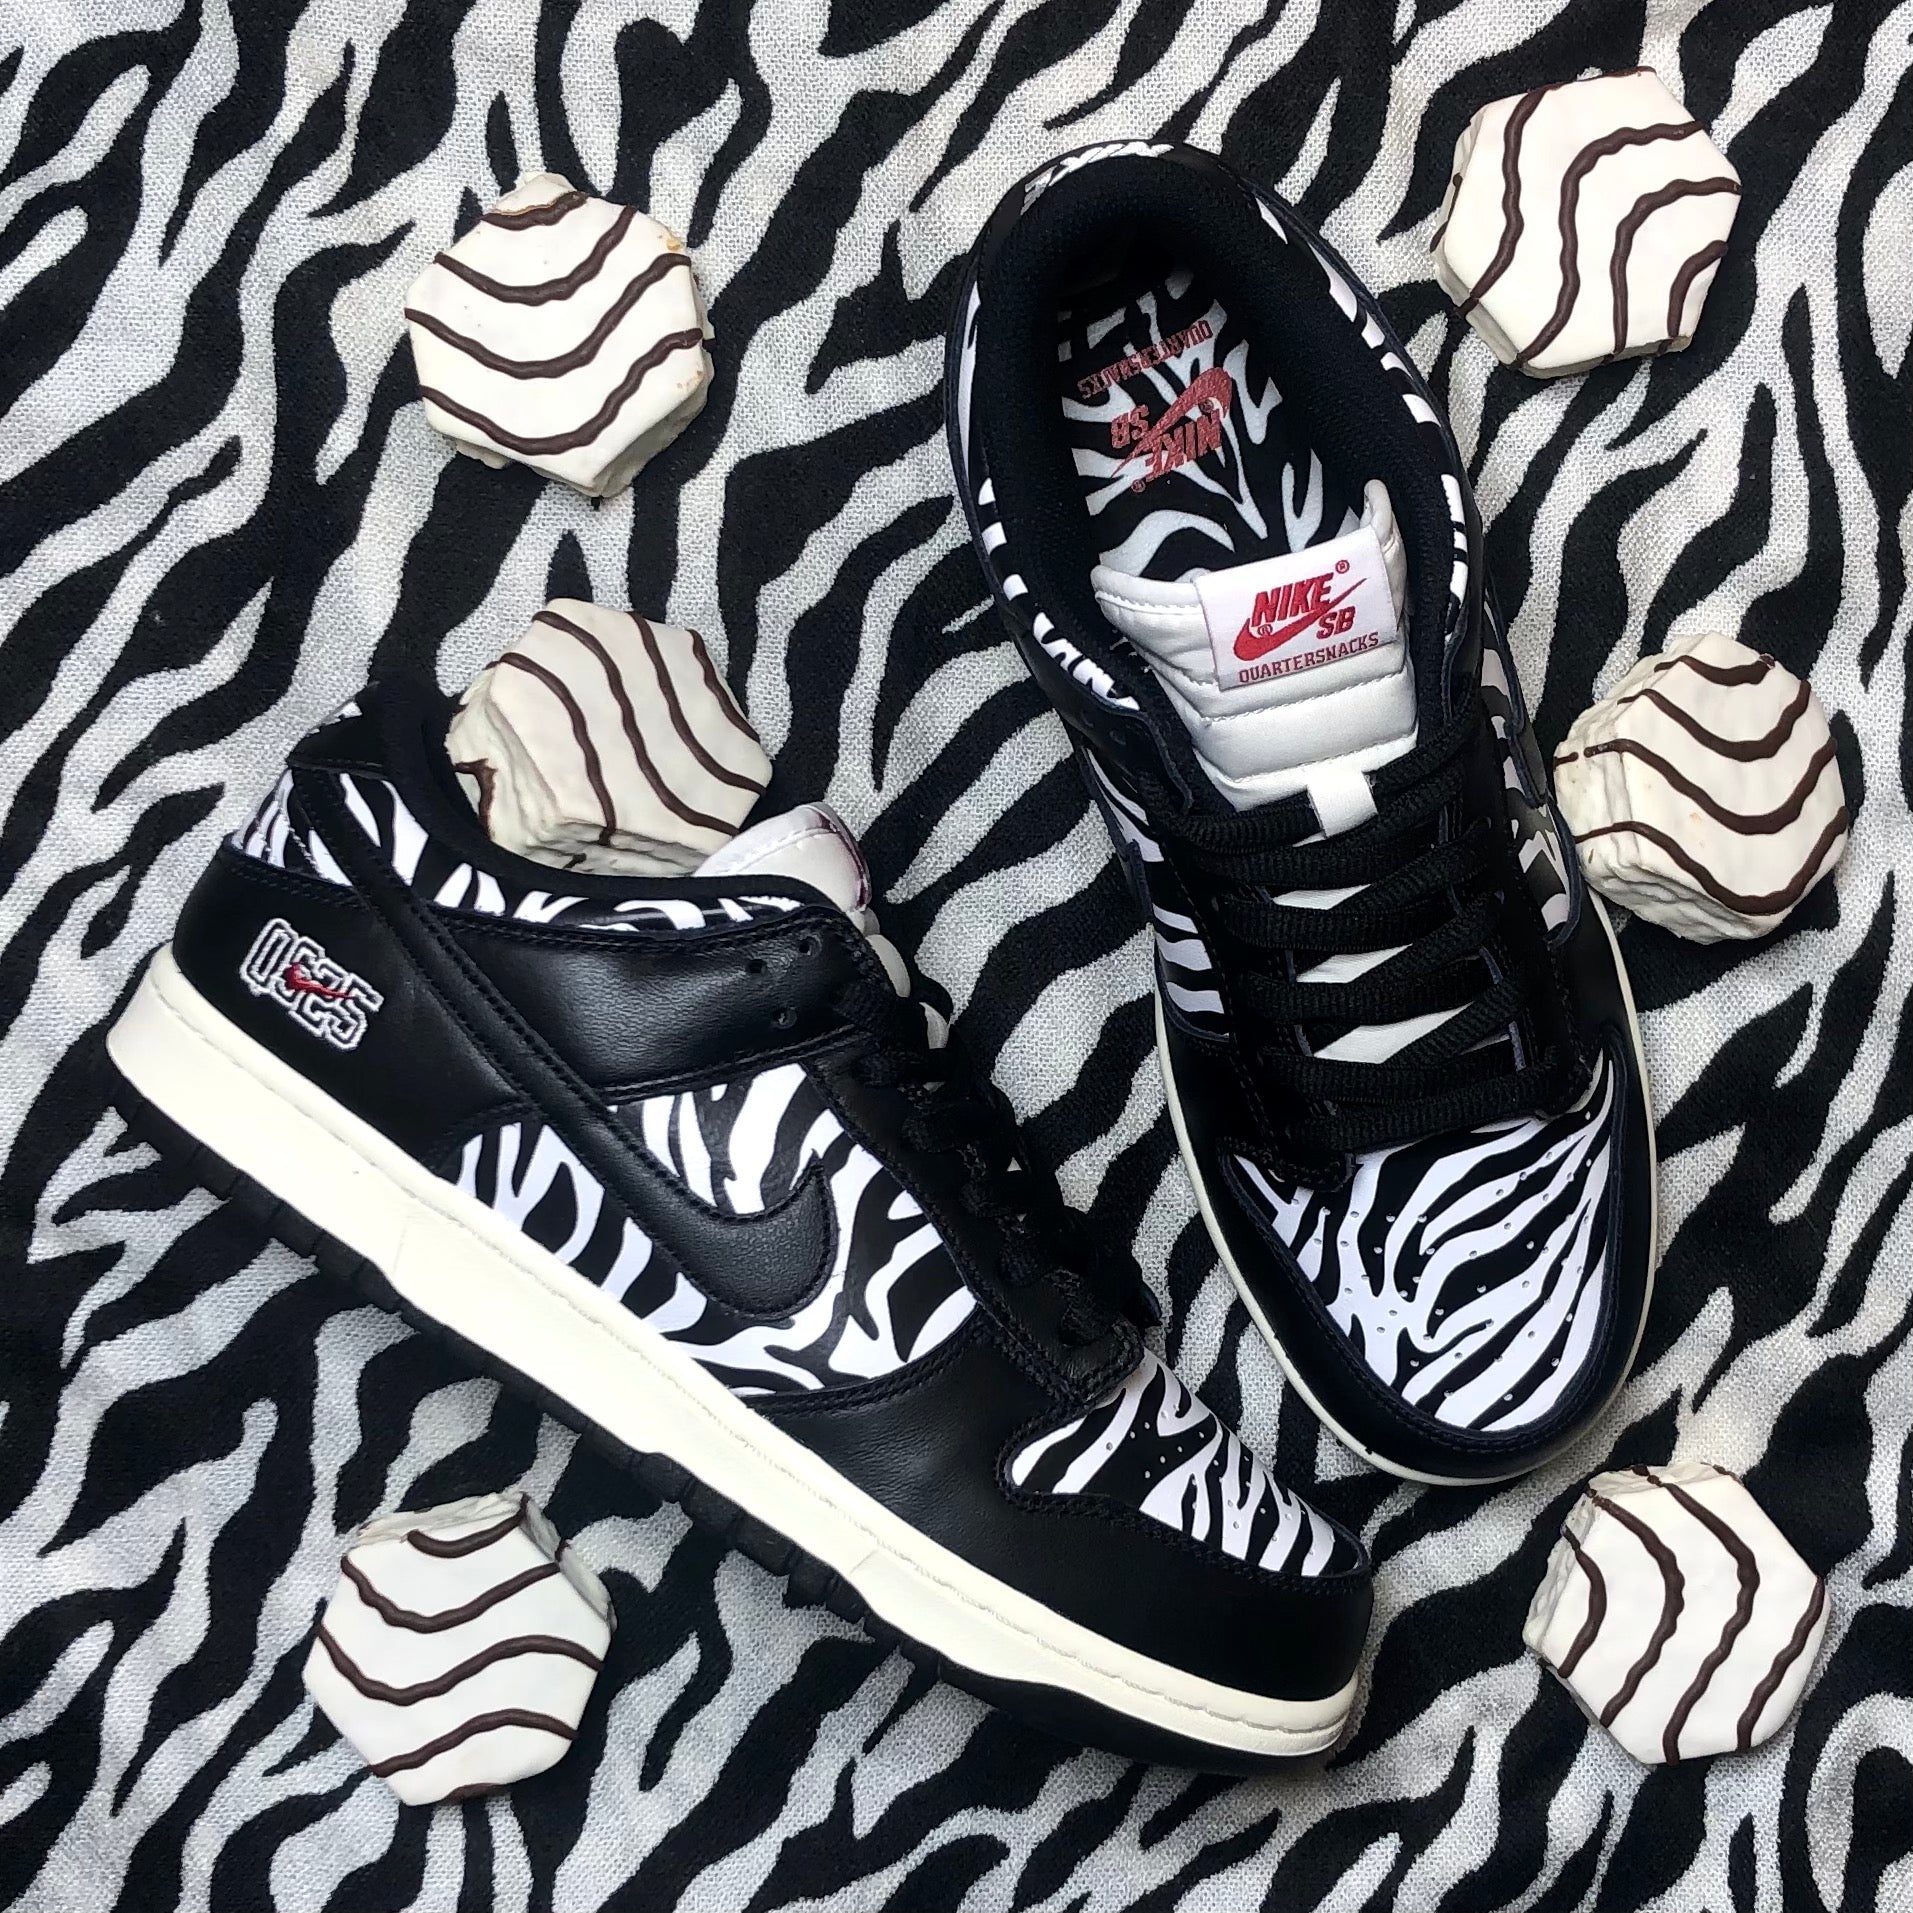 Nike SB x Quartersnacks Zebra Dunk Raffle